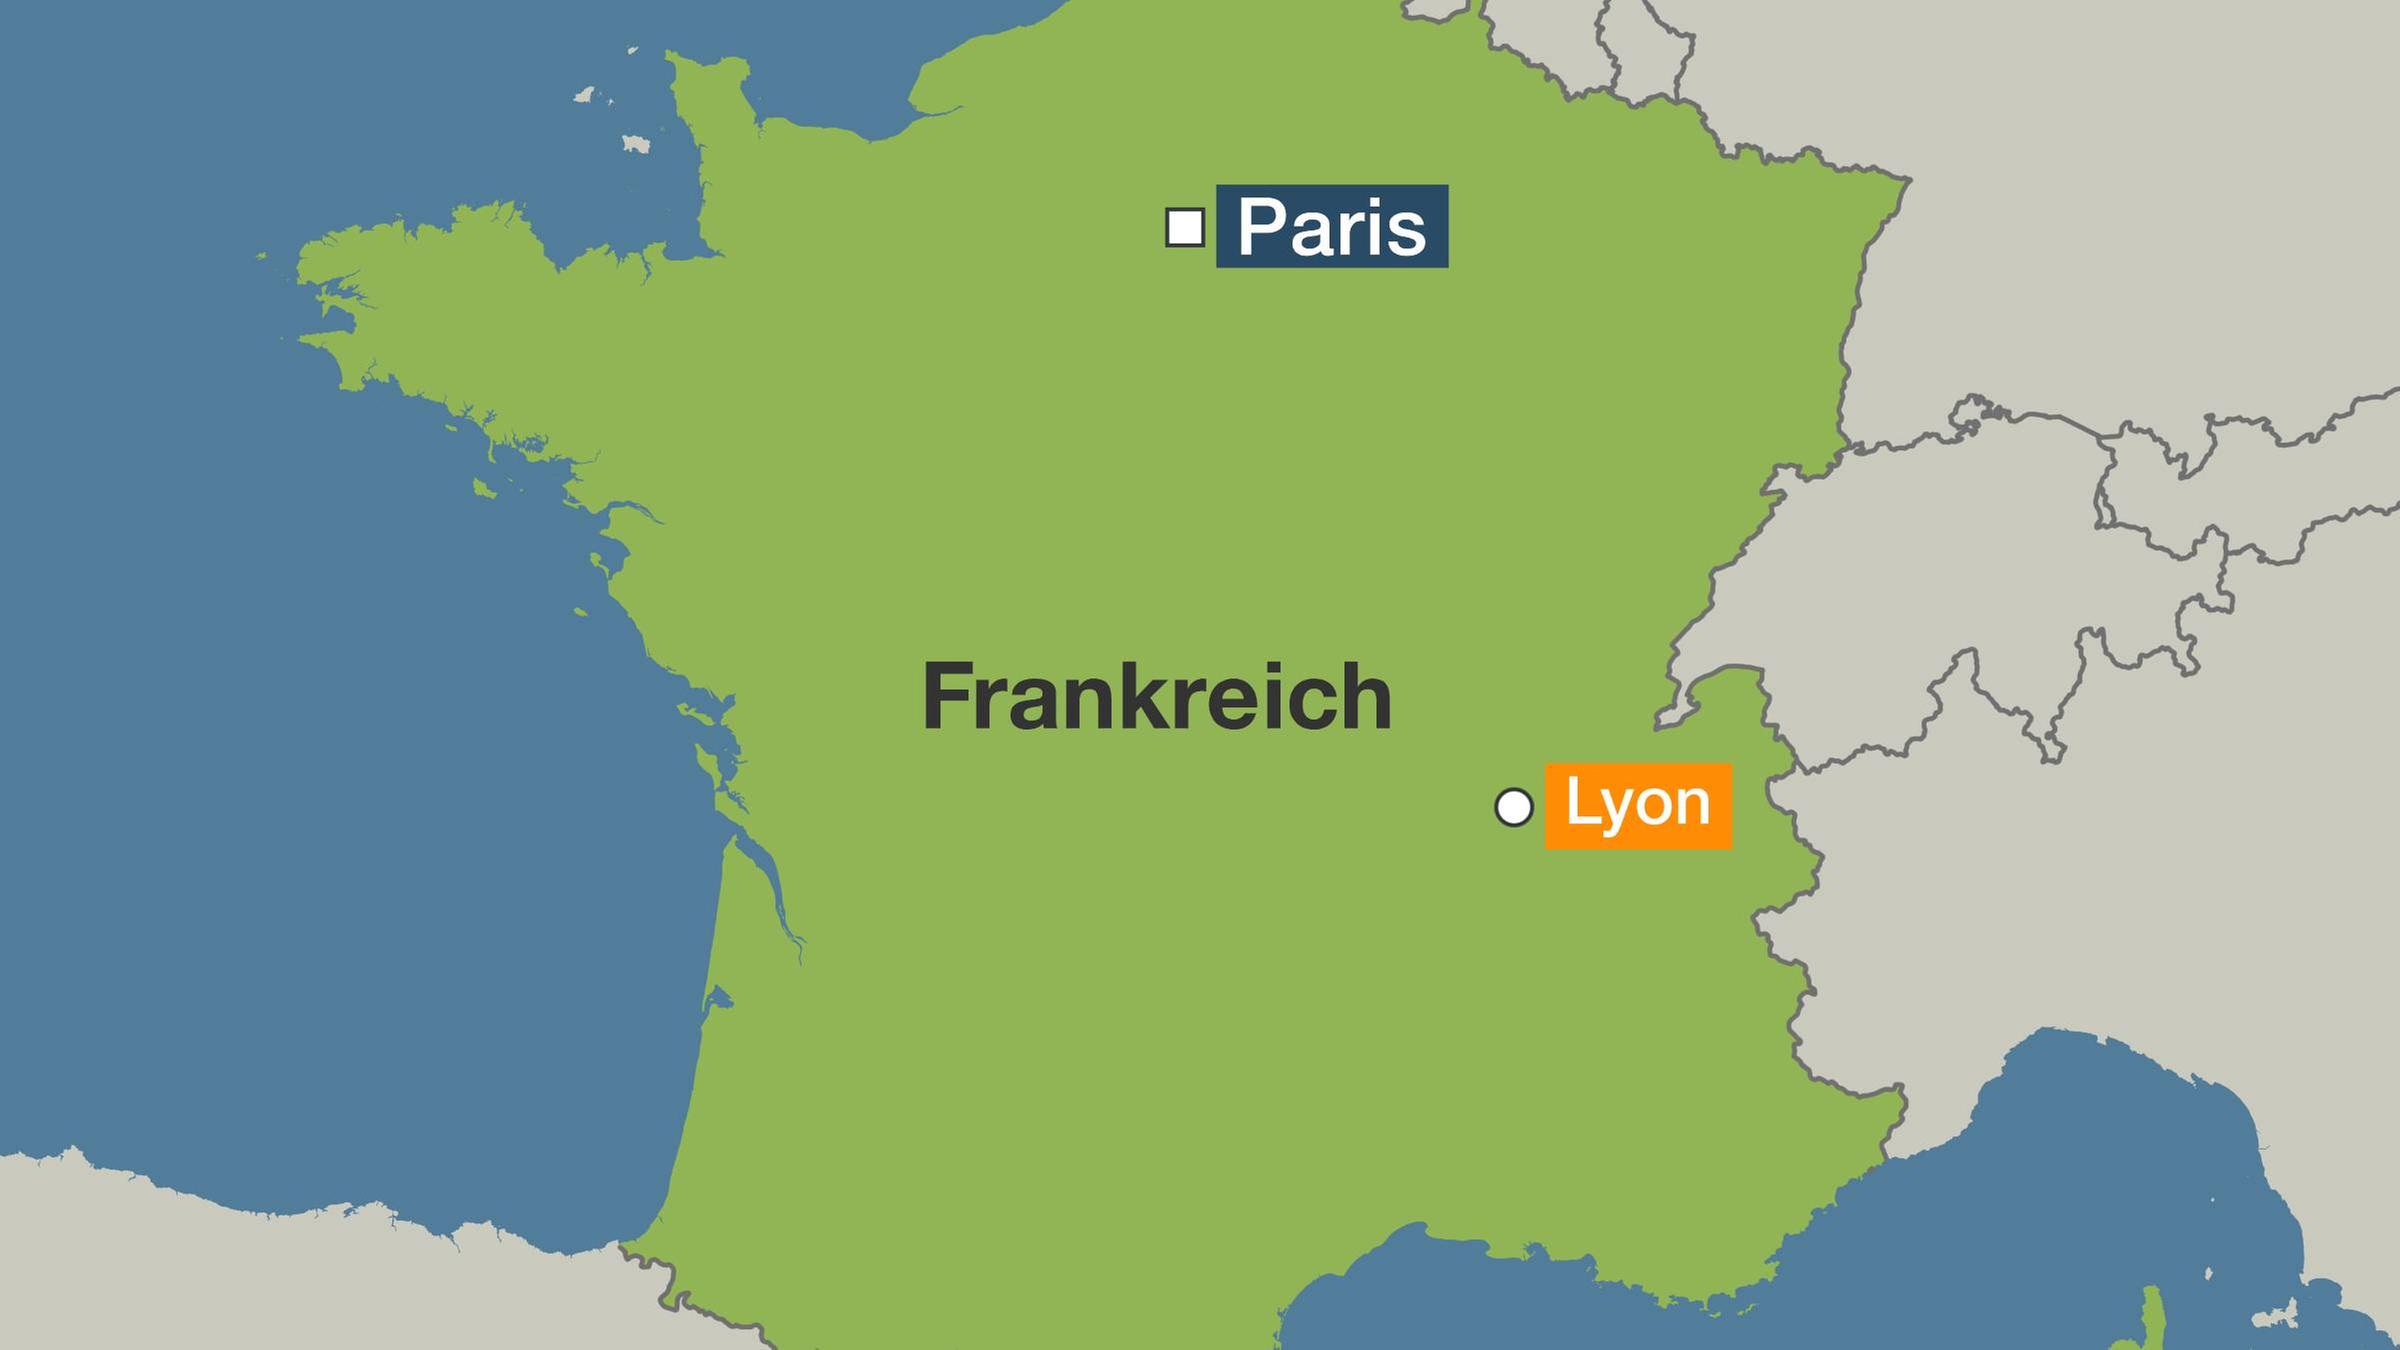 frankreich lyon karte Nach Explosion Im Stadtzentrum Polizei In Lyon Fahndet Nach Tatverdachtigem Zdfheute frankreich lyon karte